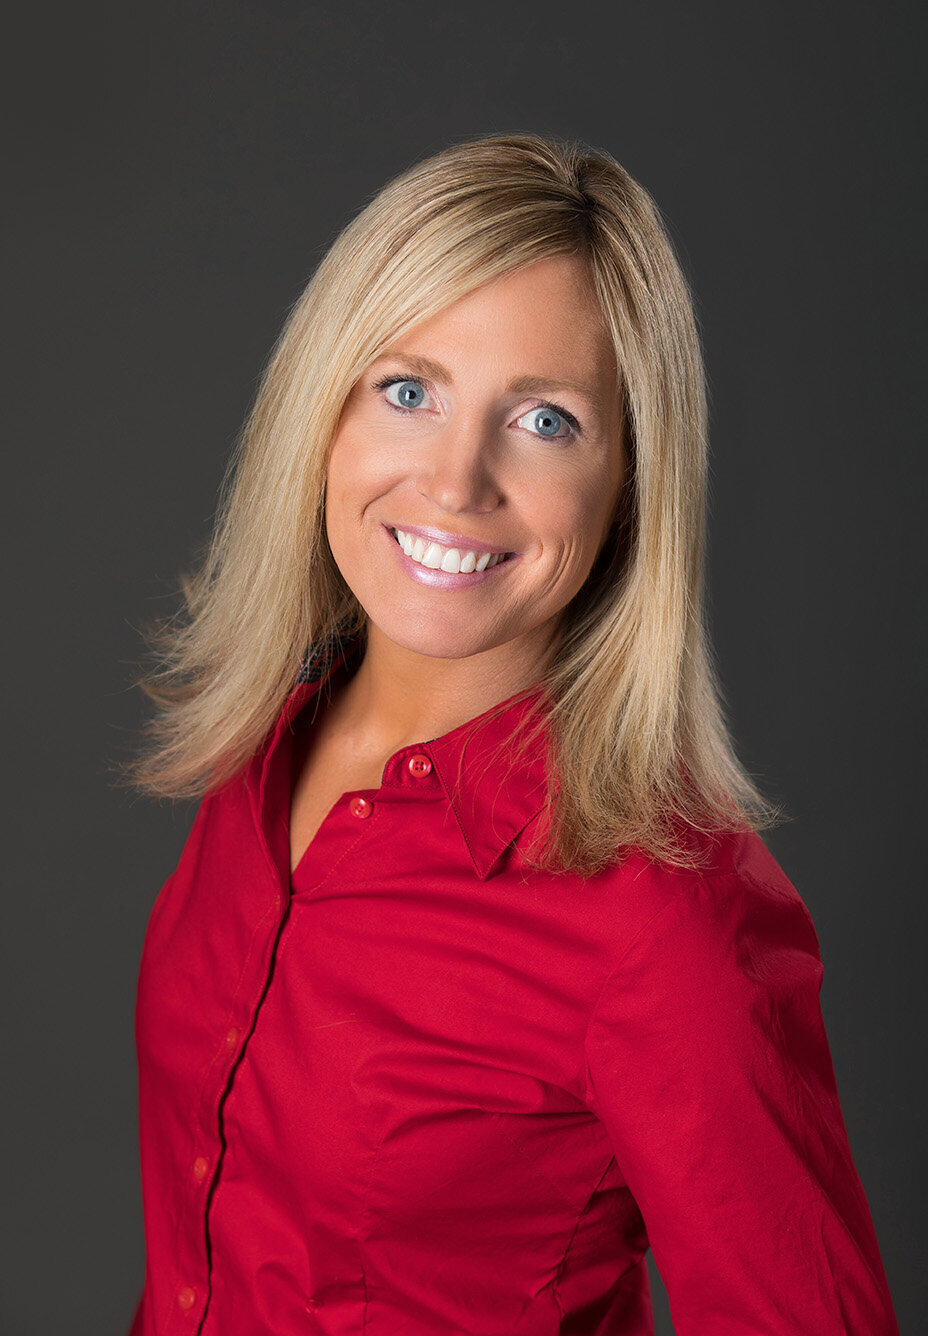 Headshot Jill Bieloh Realtor wearing red shirt on gray backdrop.